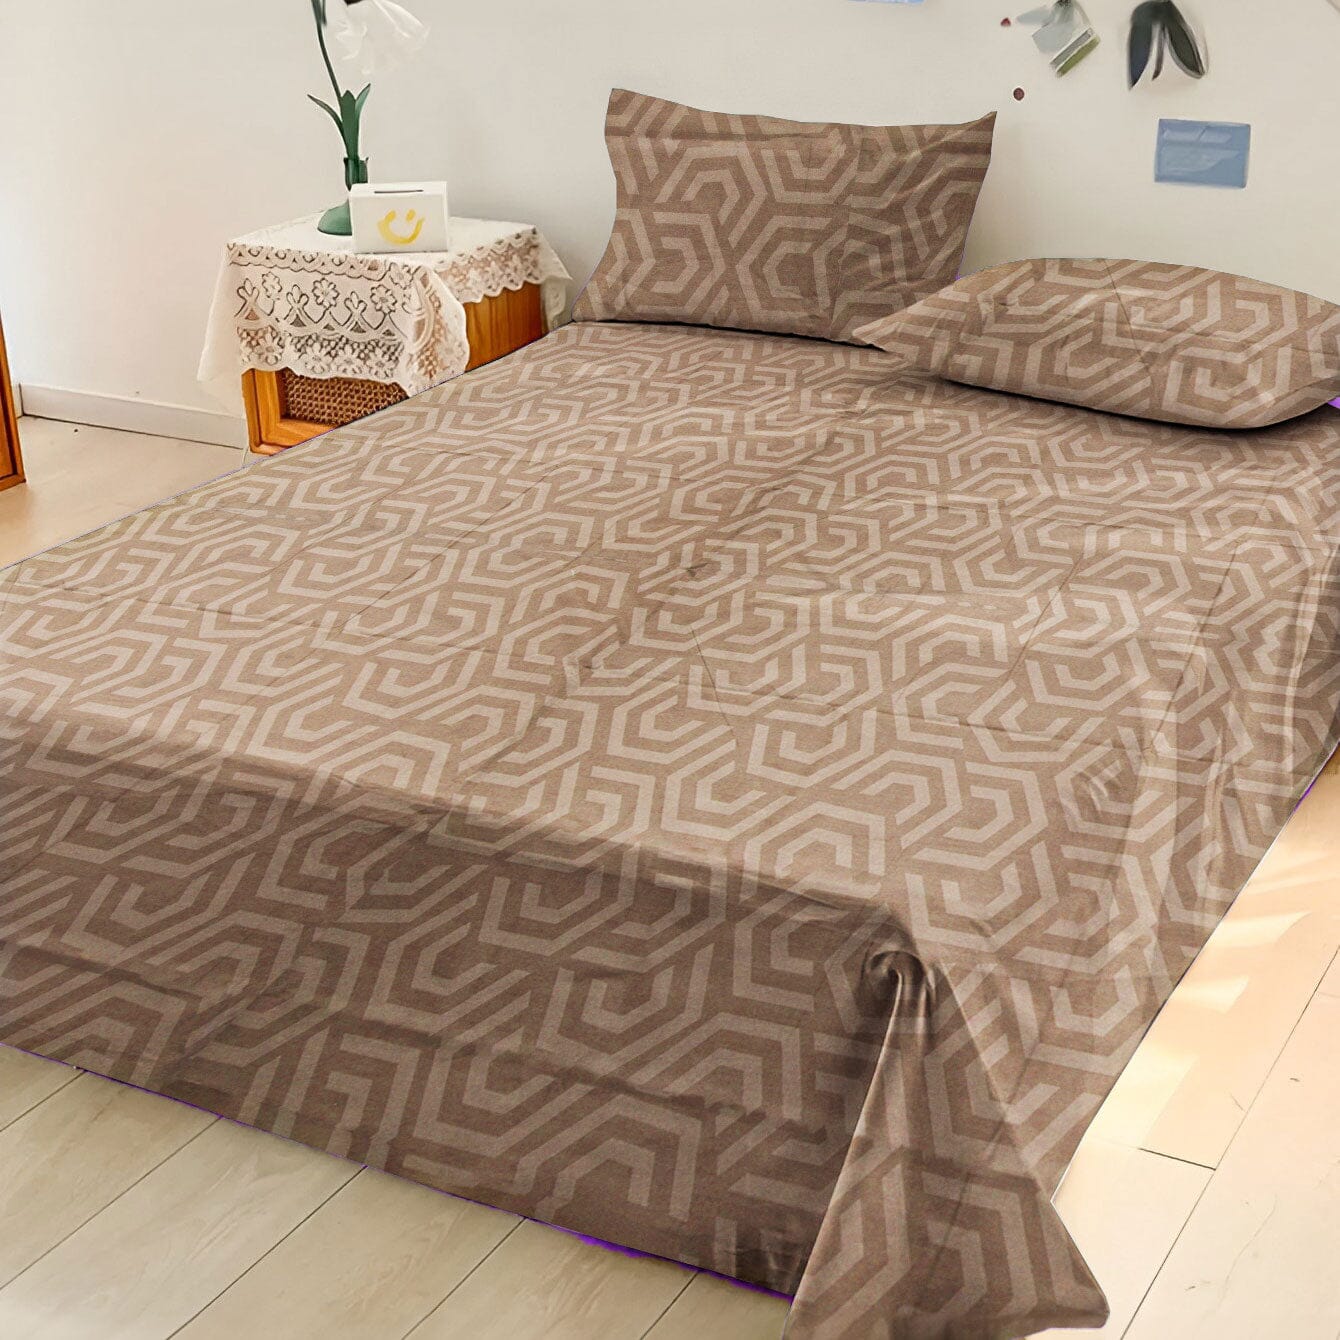 Polo Republica Silkeborg Premium Collection 3 Piece Double Bed Sheet Bed Sheet Fiza 